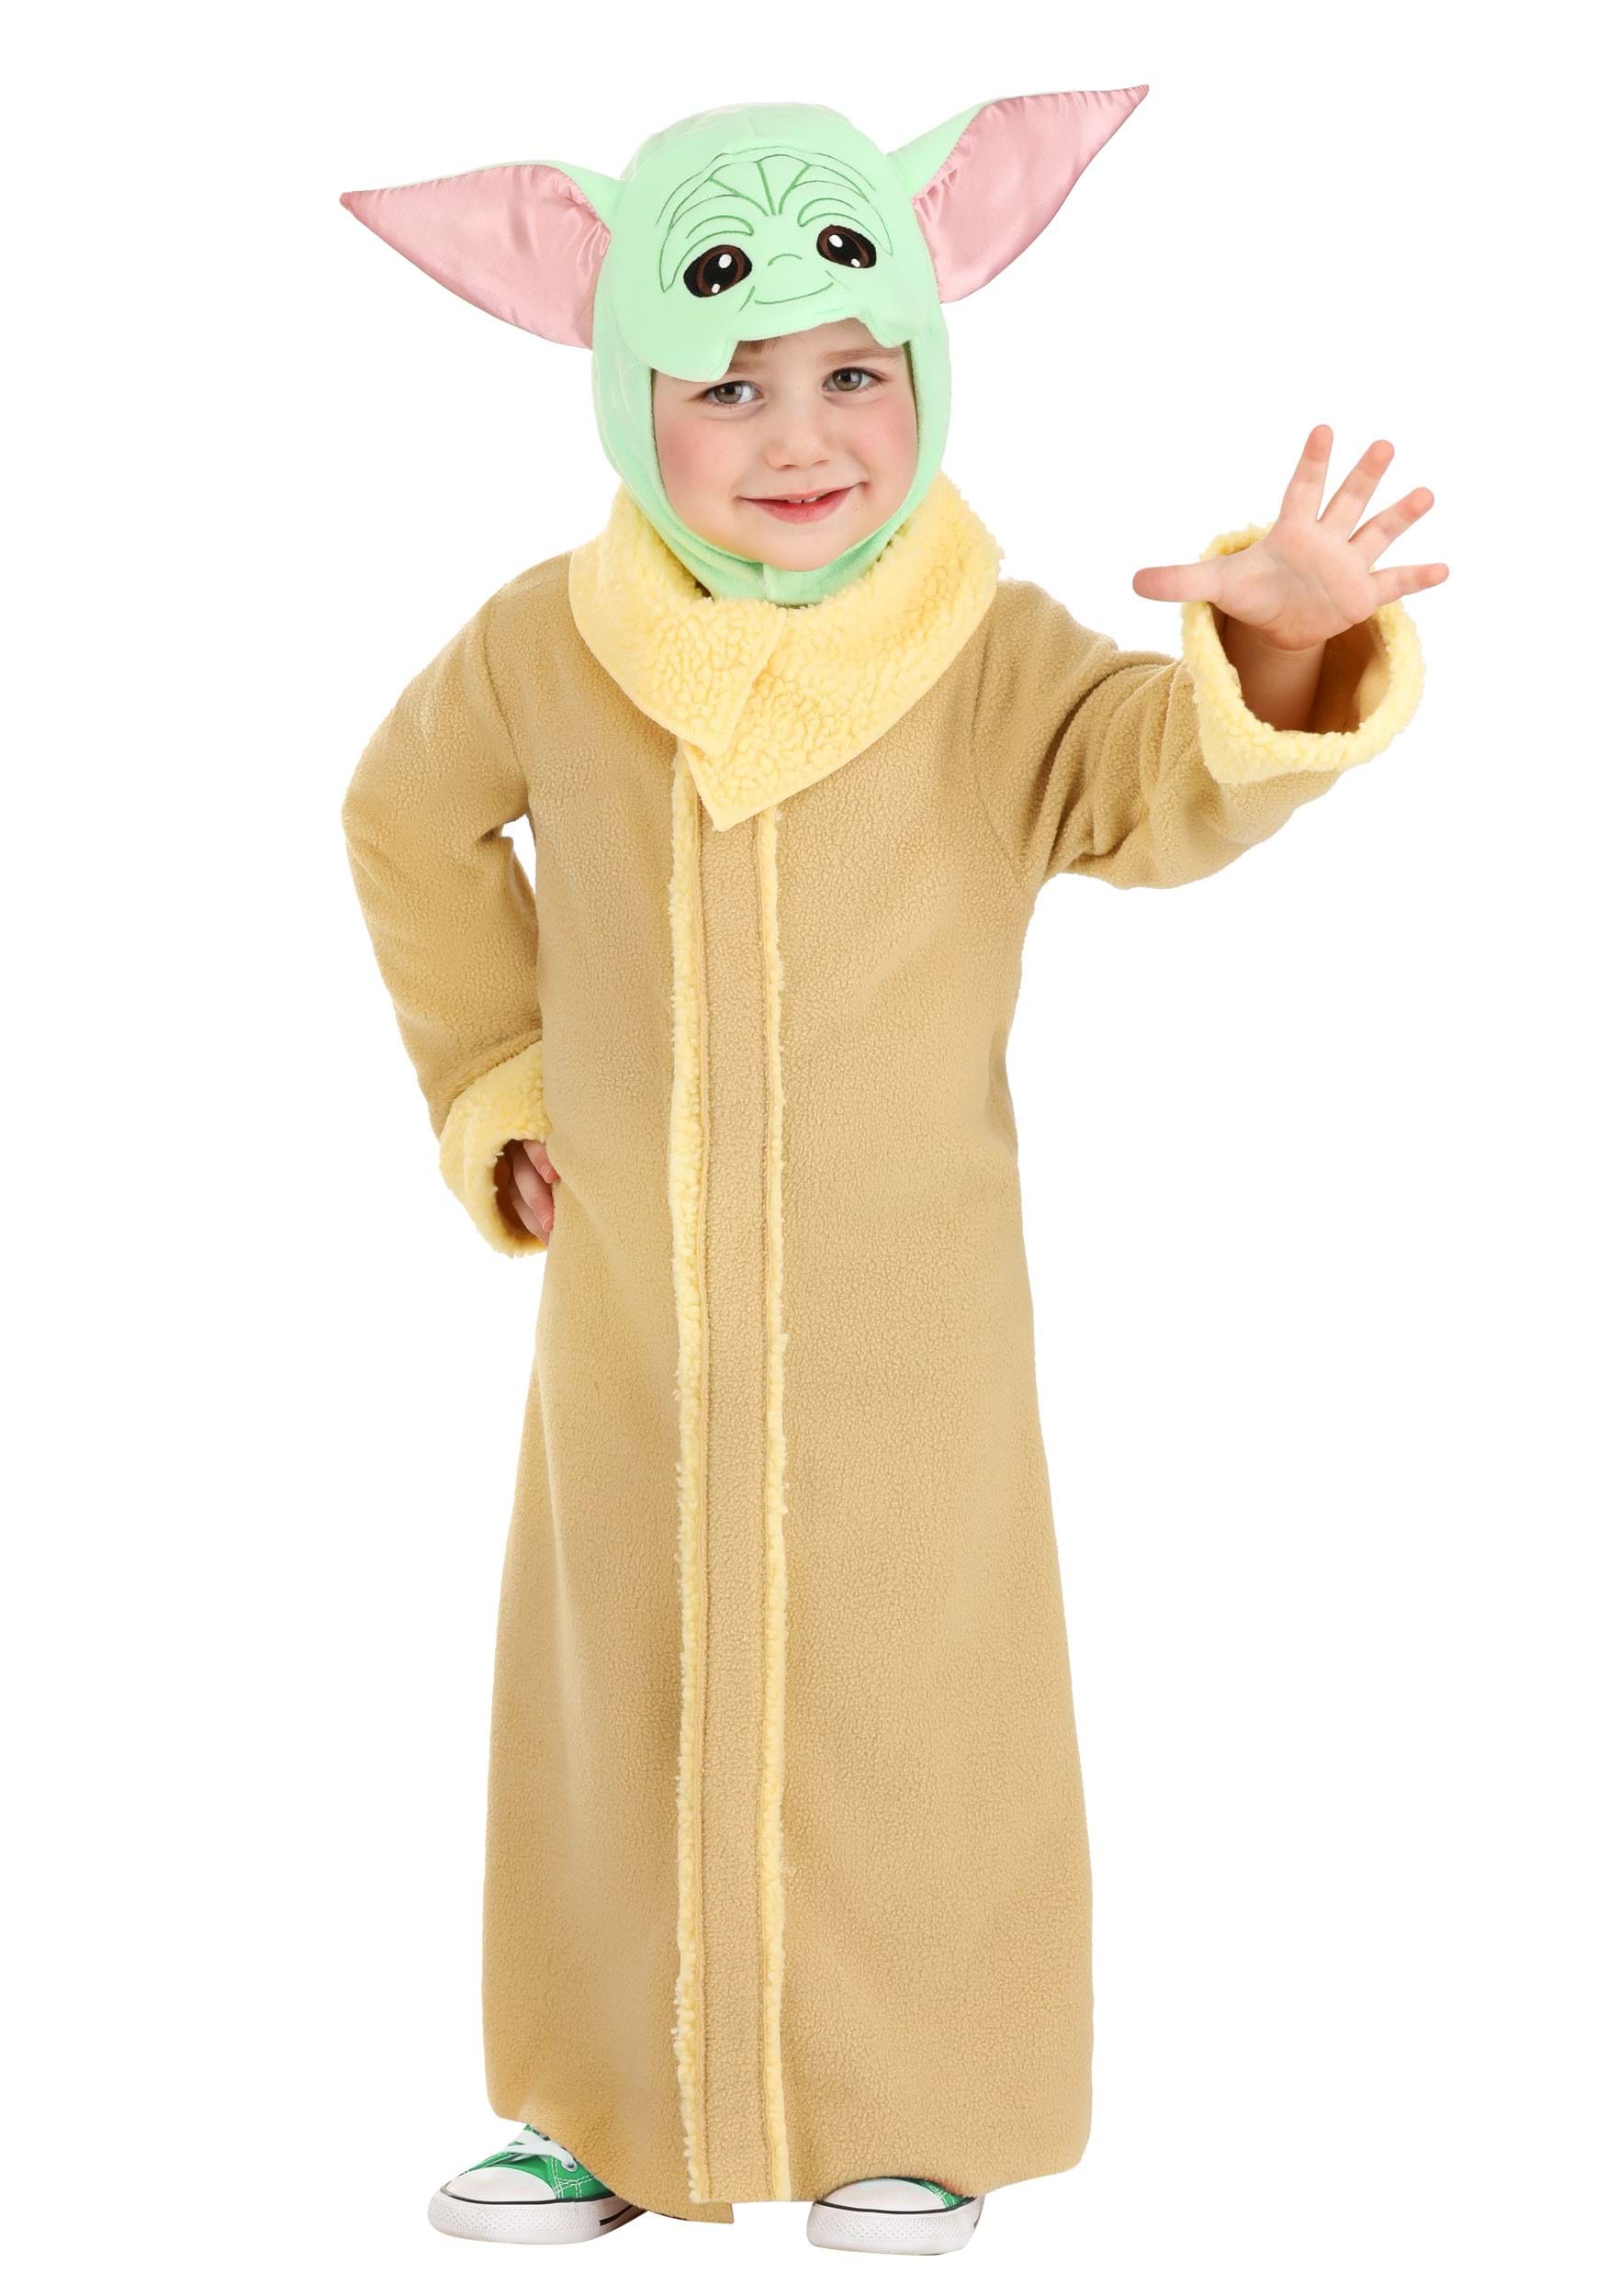 Photos - Fancy Dress Jazwares Star Wars Grogu Costume for Toddlers Brown/Pink/Green JWC 